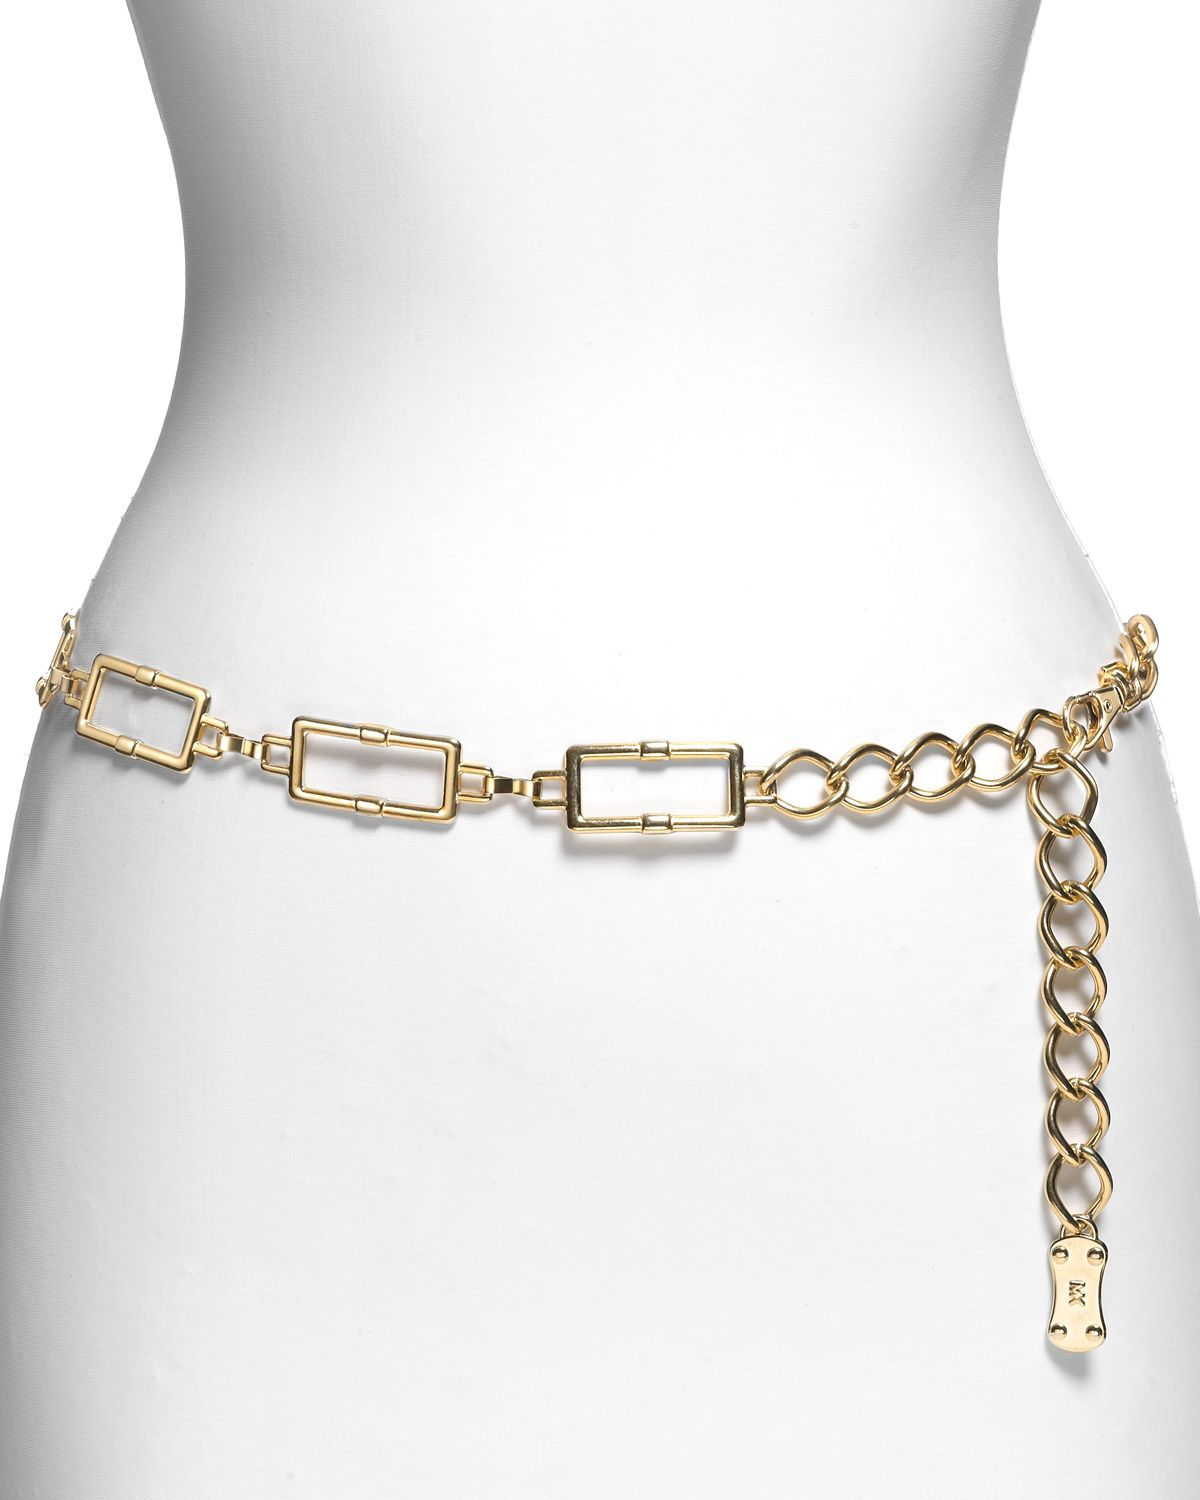 Lyst - Michael Michael Kors Chain Link Belt in Metallic